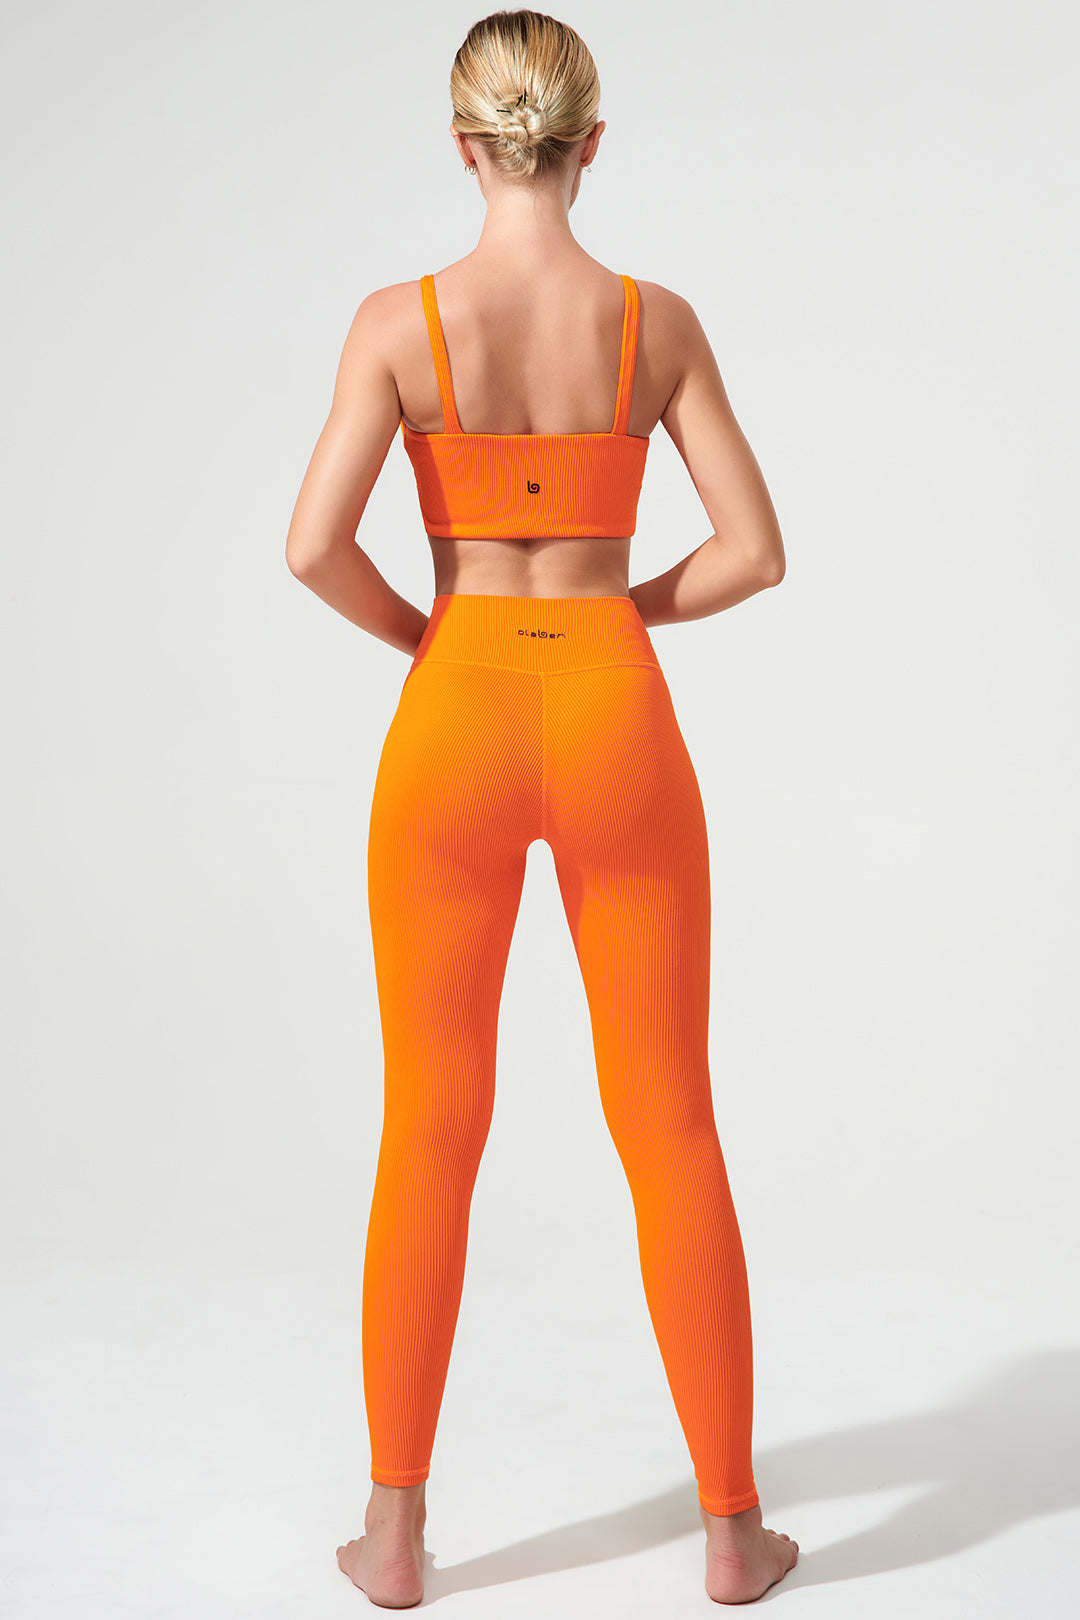 Fleuri Aris women's bra in tangerine orange, a vibrant and stylish choice for lingerie.